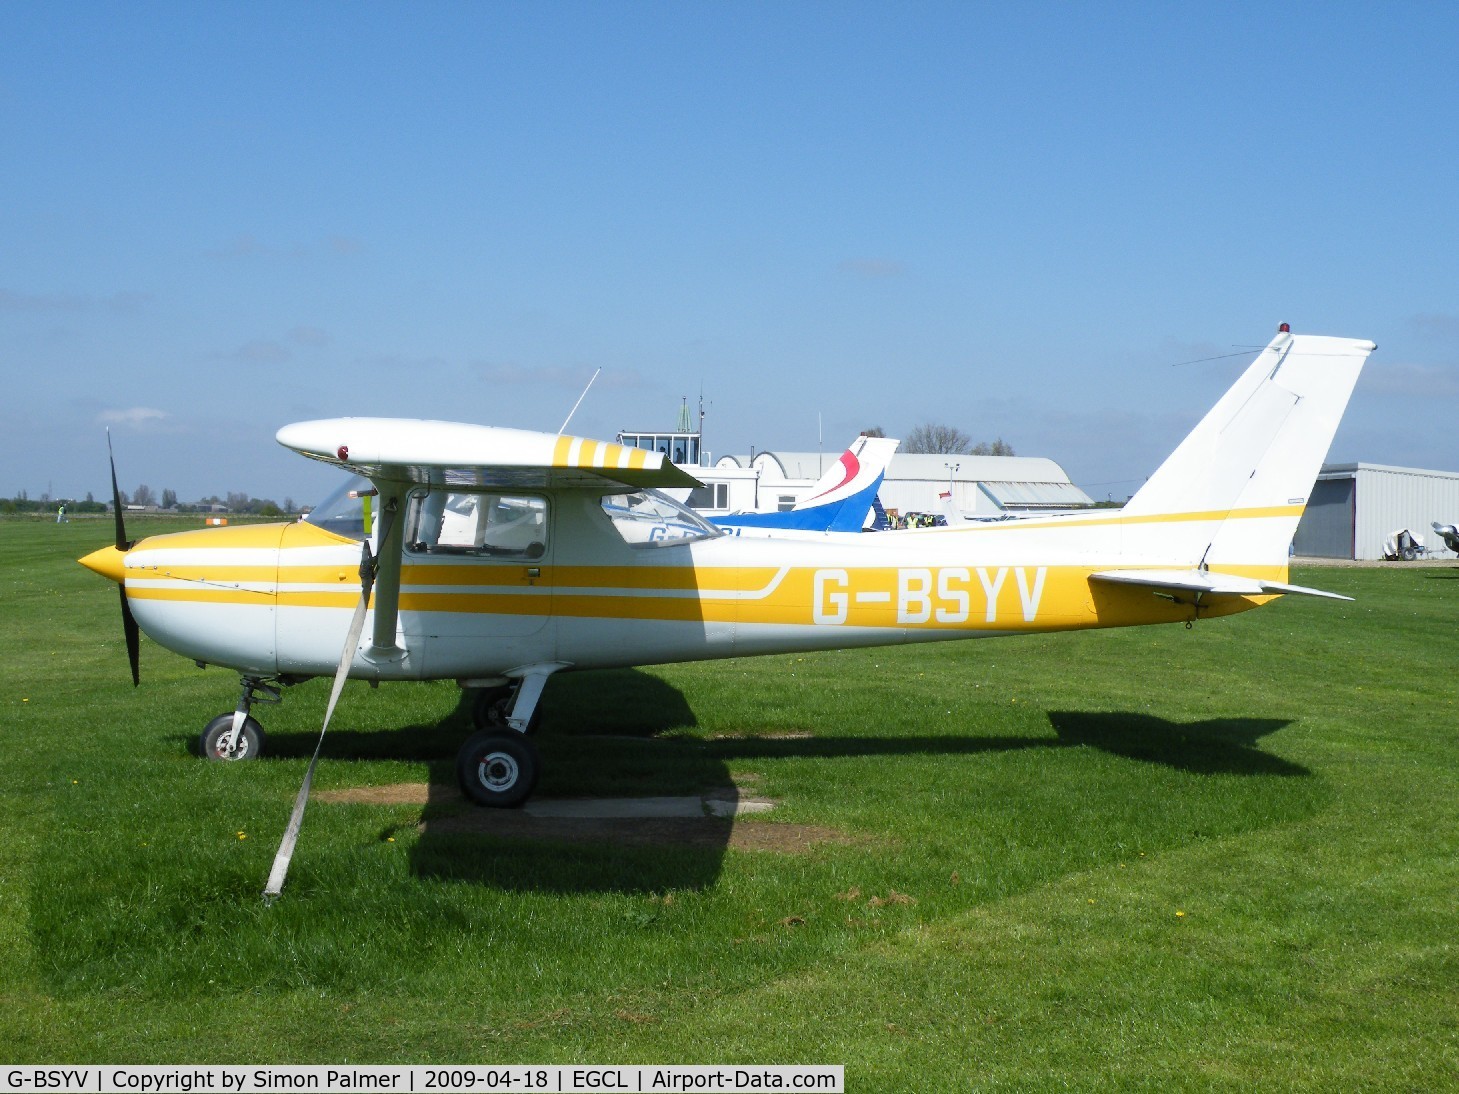 G-BSYV, 1976 Cessna 150M C/N 150-78371, Cessna 150M based at Fenland